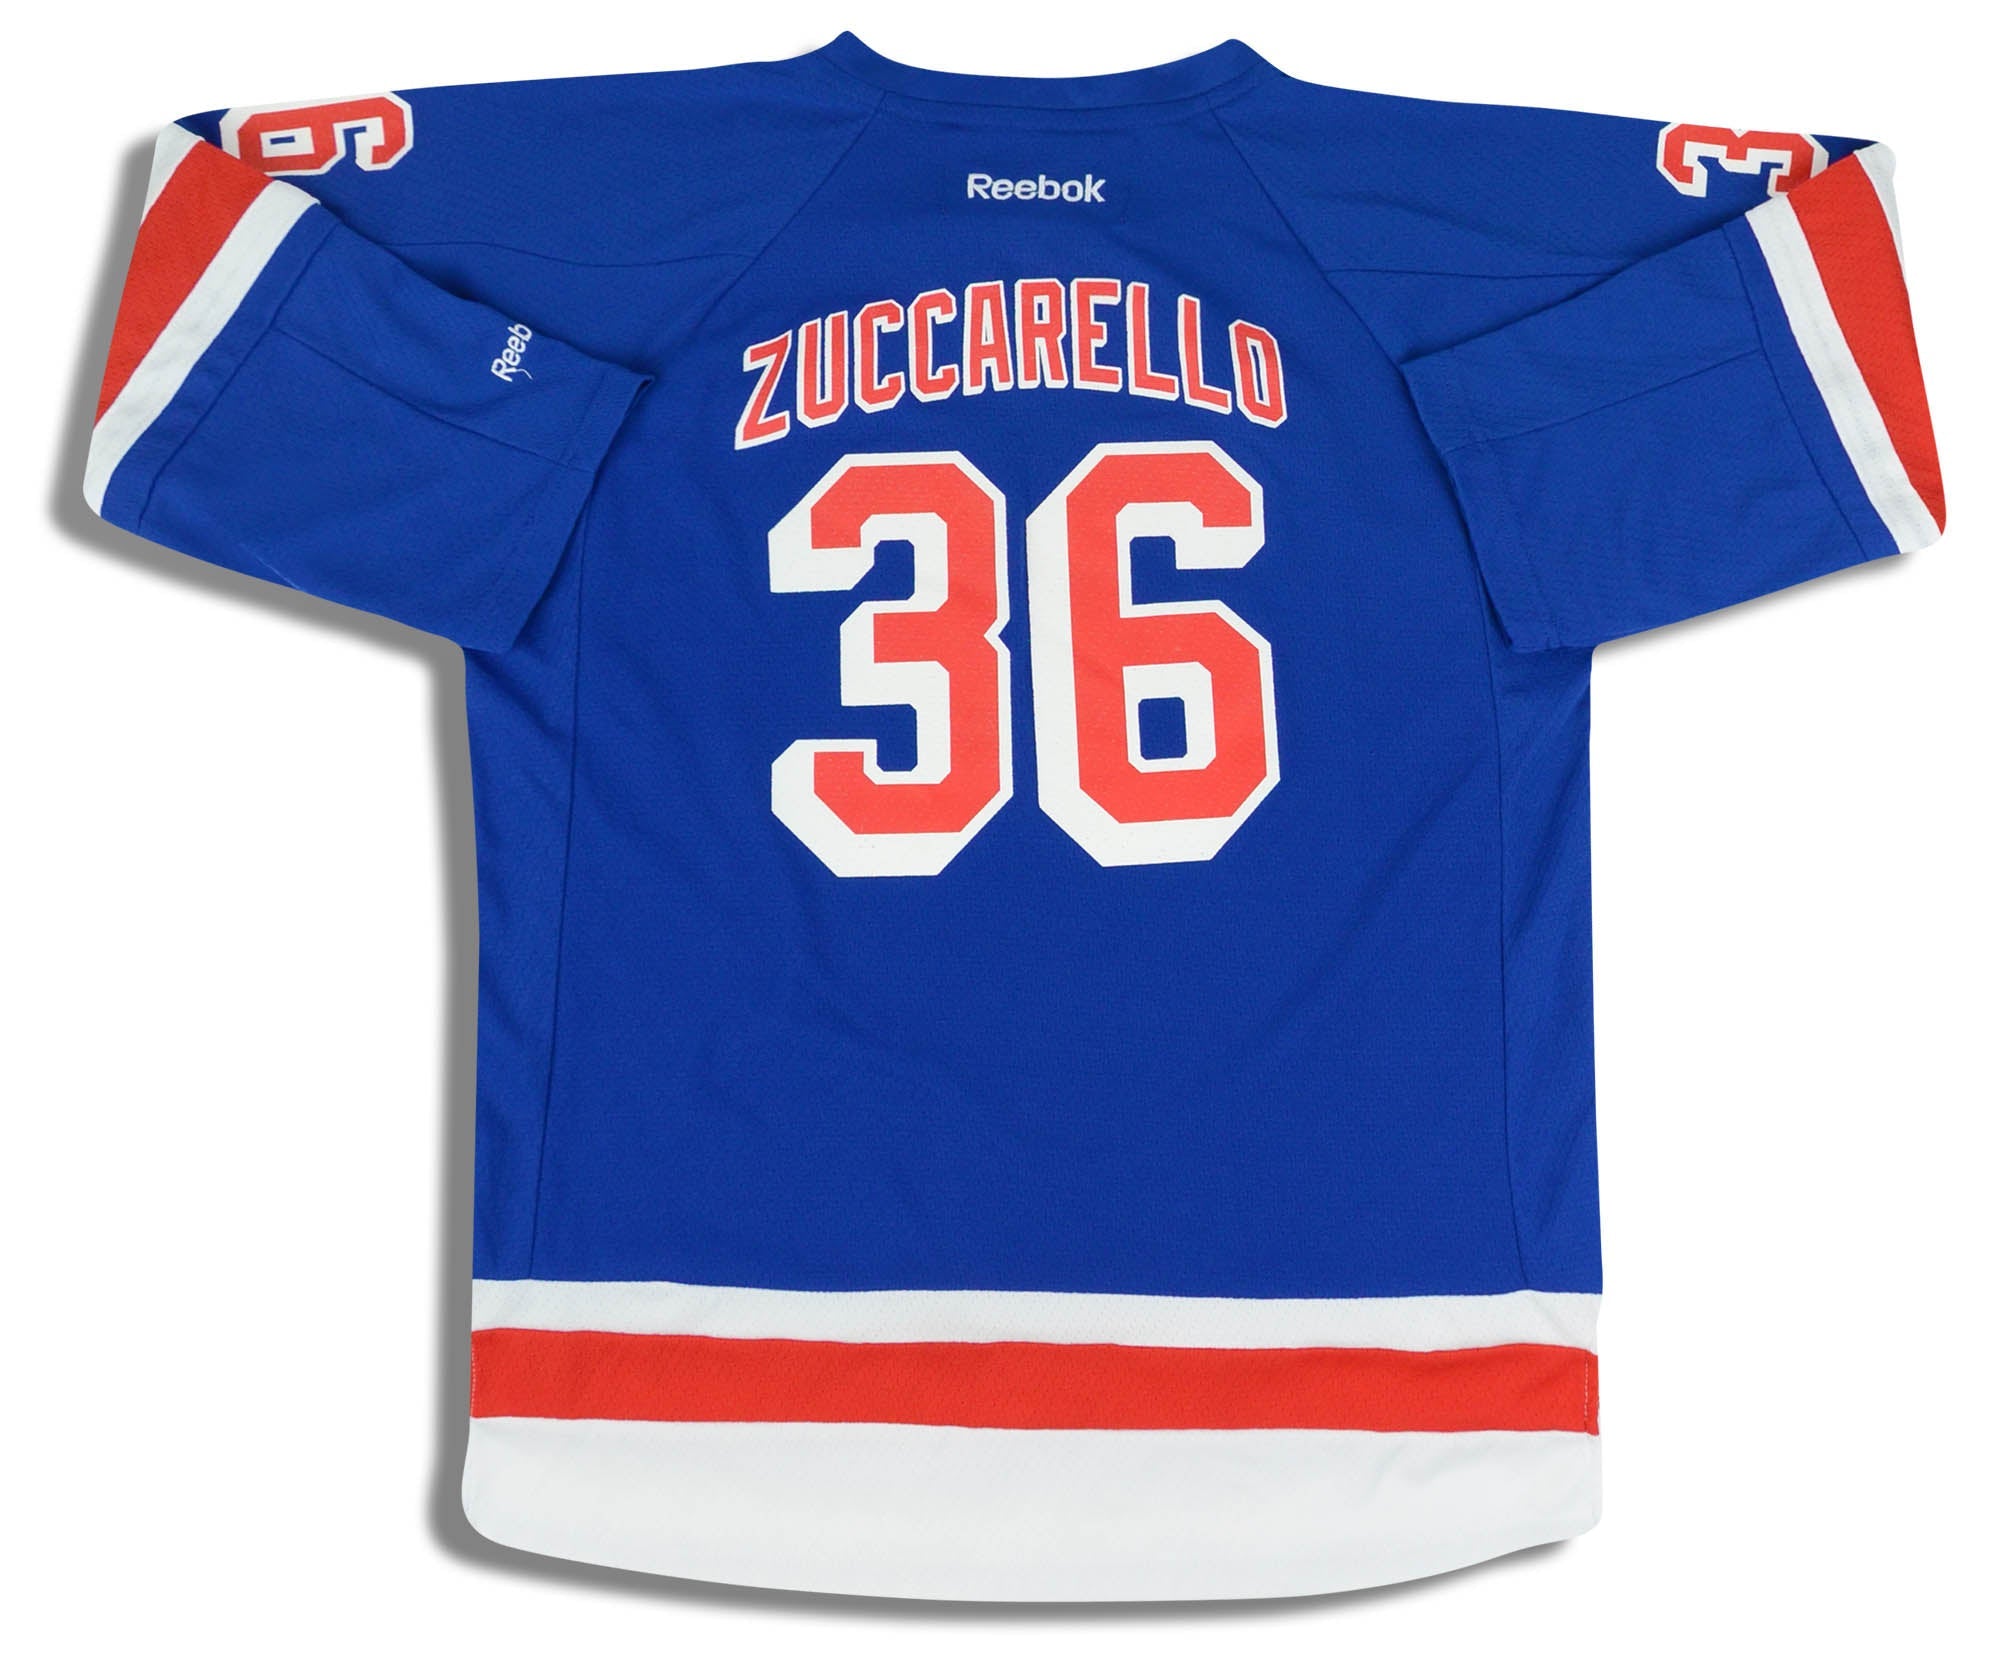 New York Rangers Replica Home Jersey - Mats Zuccarello - Youth